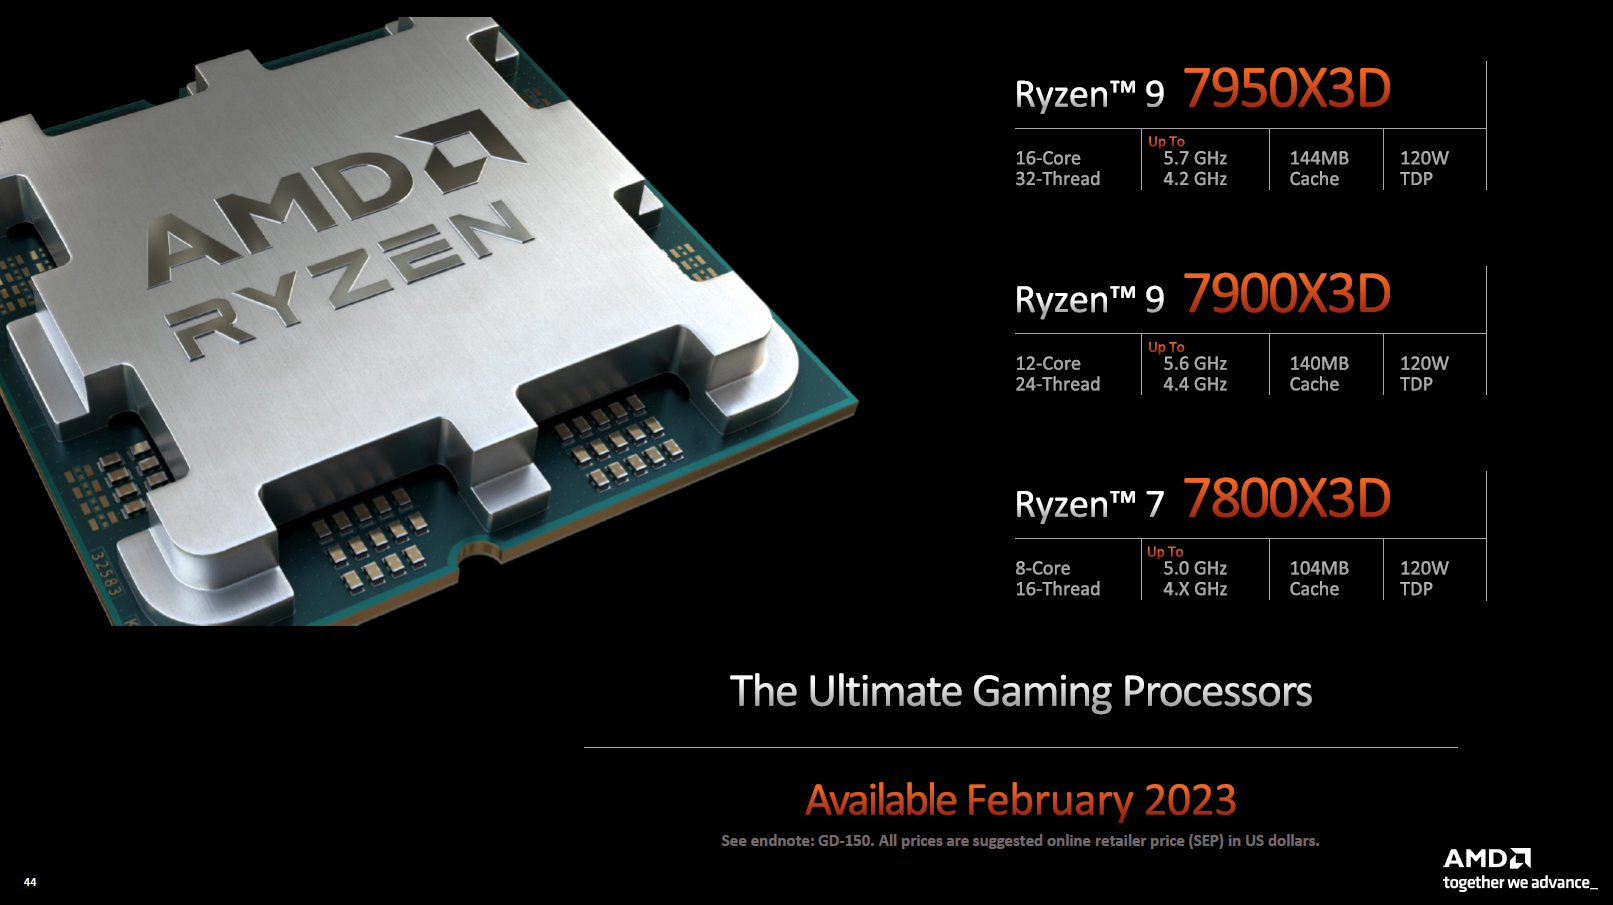 amd ryzen 7000 x3d slide final AMD RYZEN 9 7950X3D PROCESSOR REVIEW